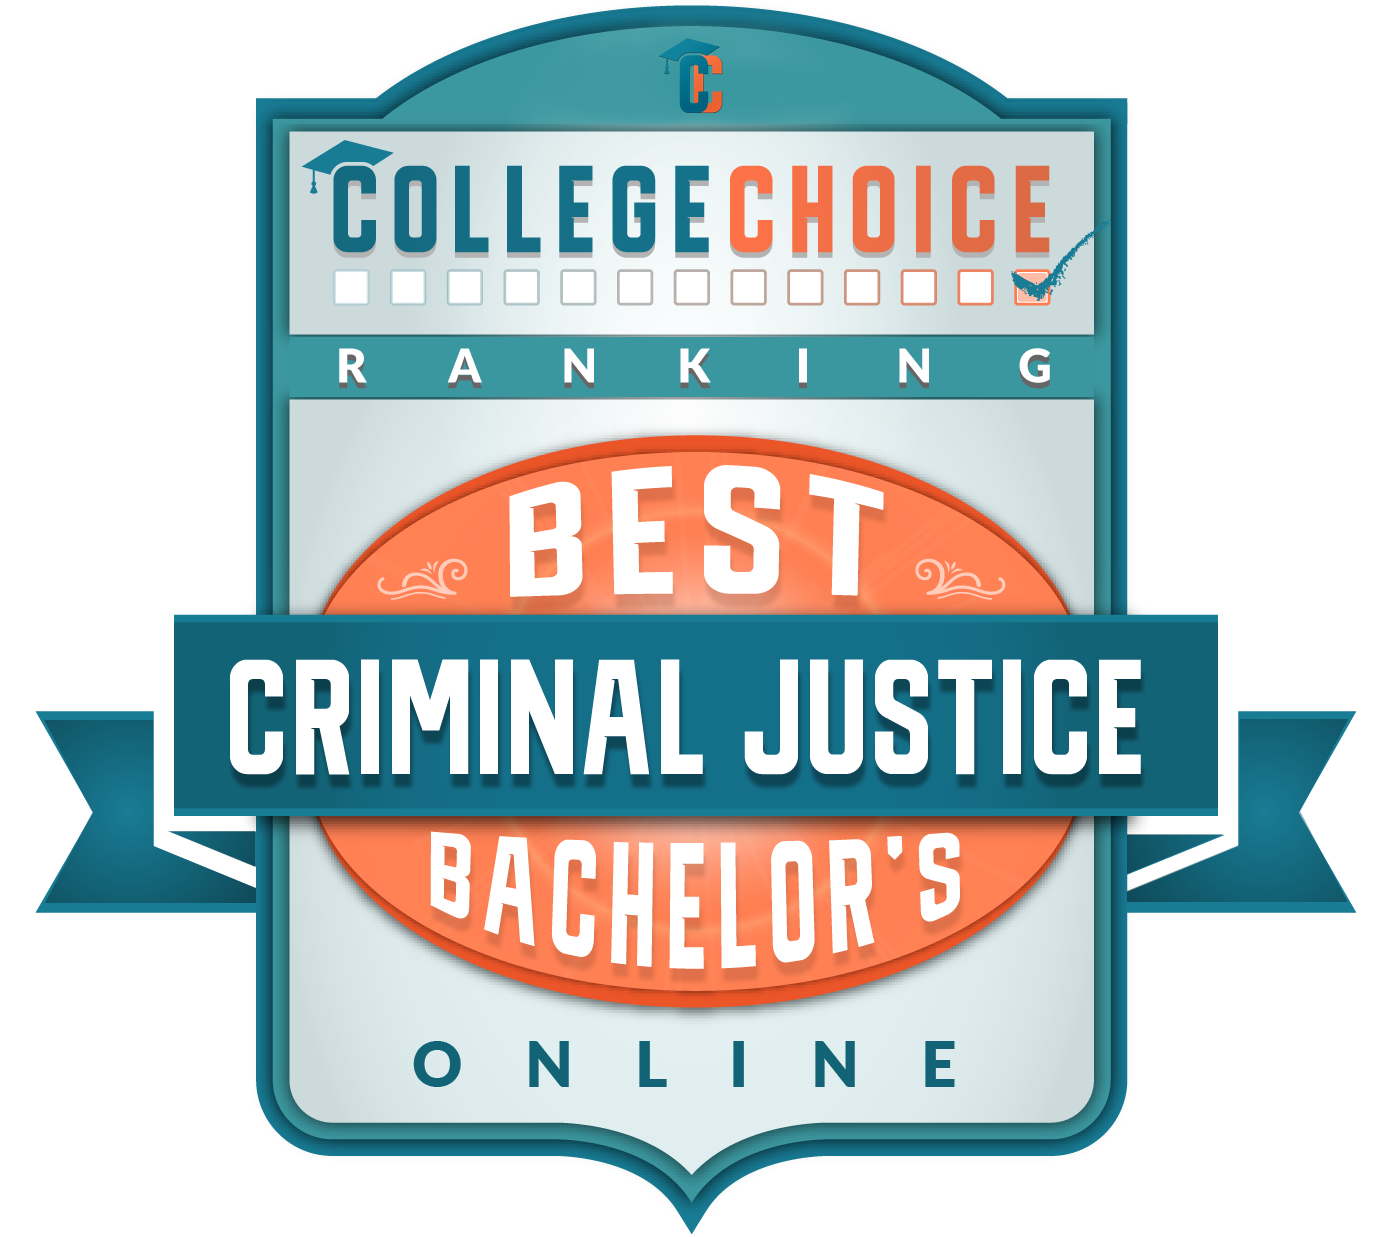 College Choice ranking badge